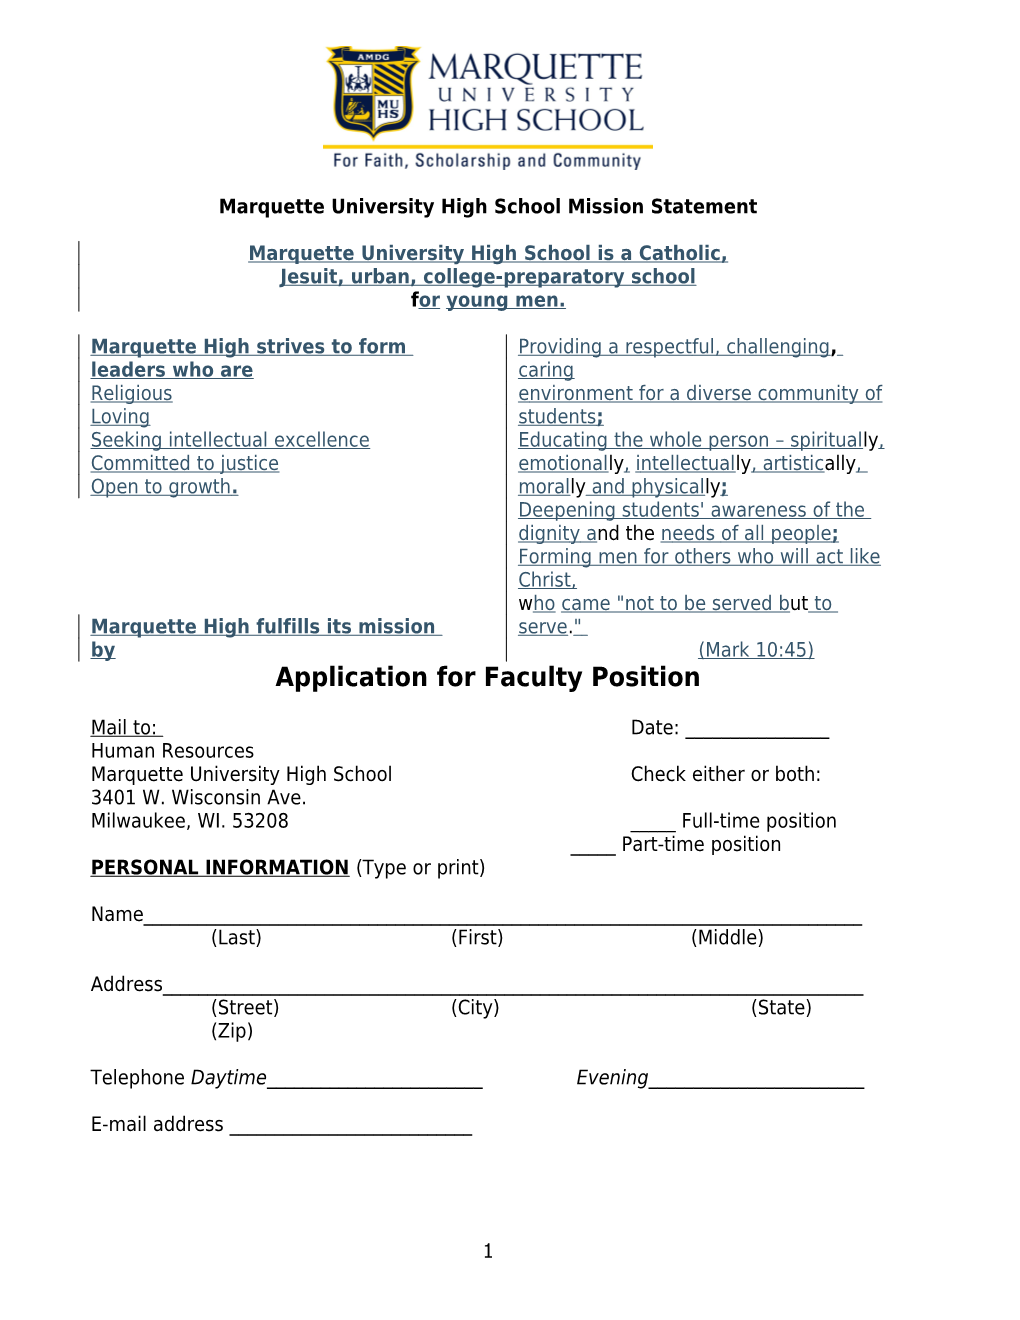 Marquette University High School Mission Statement